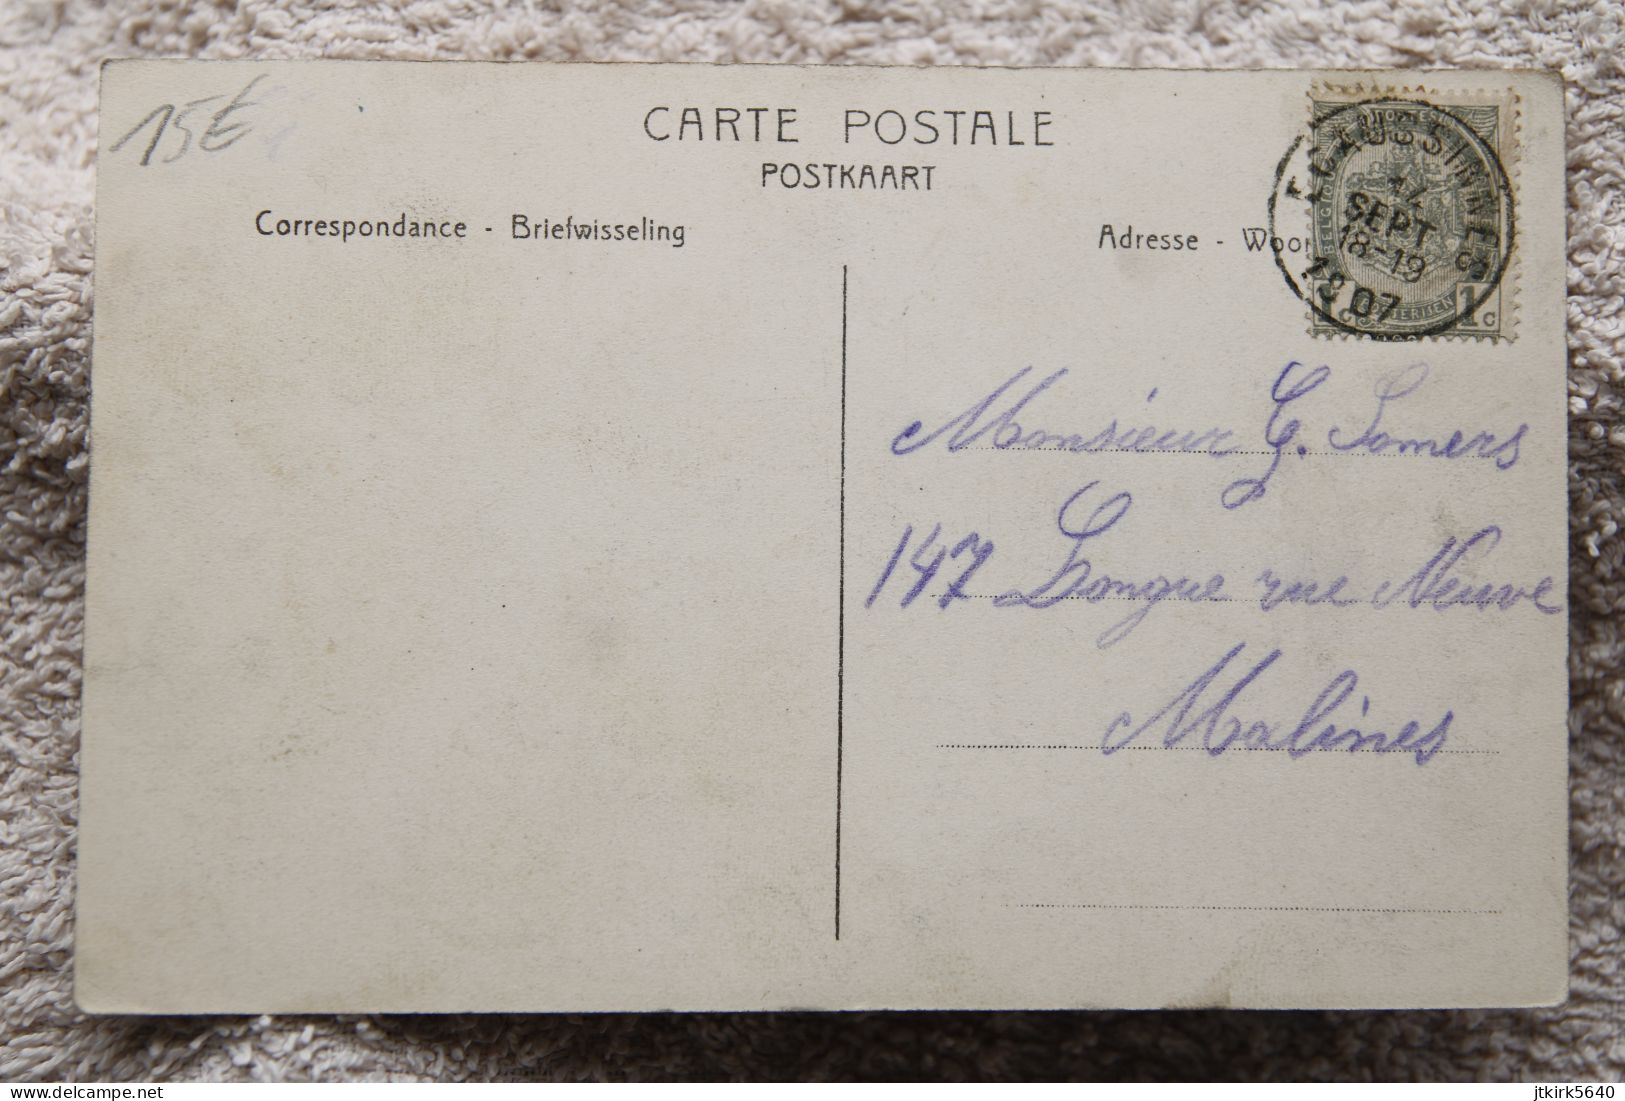 Ecaussines-Lalaing "5e Goûter Matrimonial - 20 Mai 1907. Un Groupe De Jeunes Filles" - Ecaussinnes